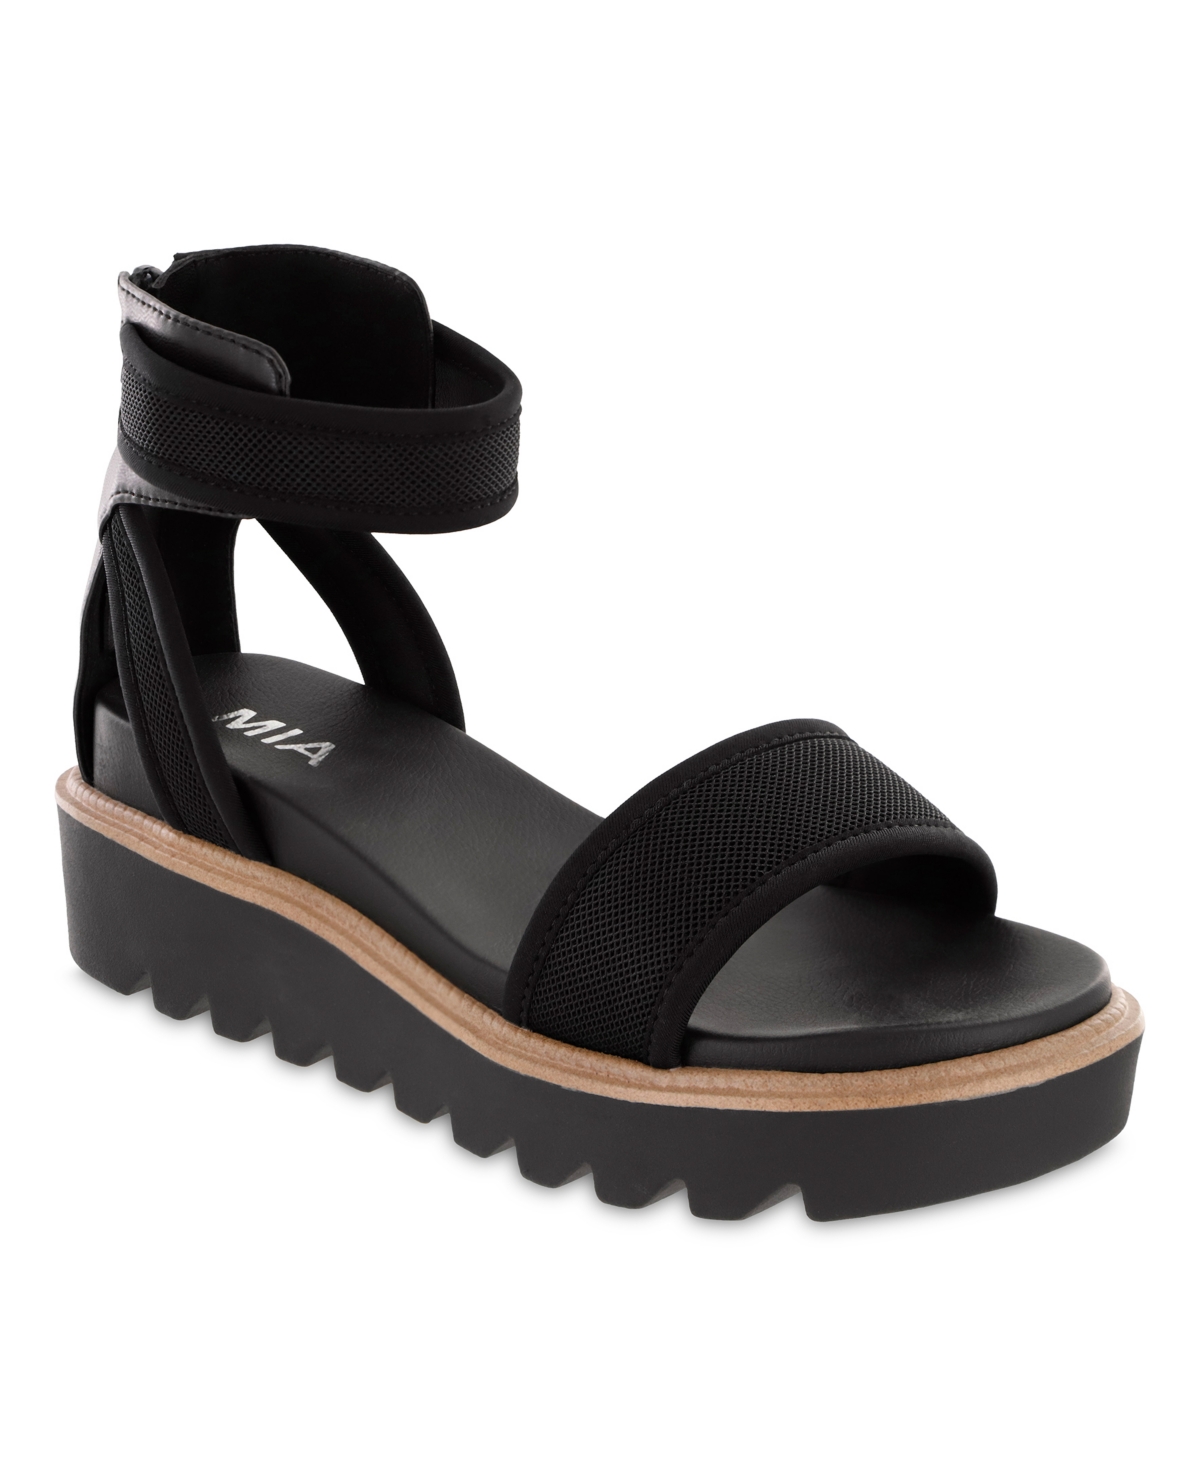 Women's Jinger Platform Sandals - Black